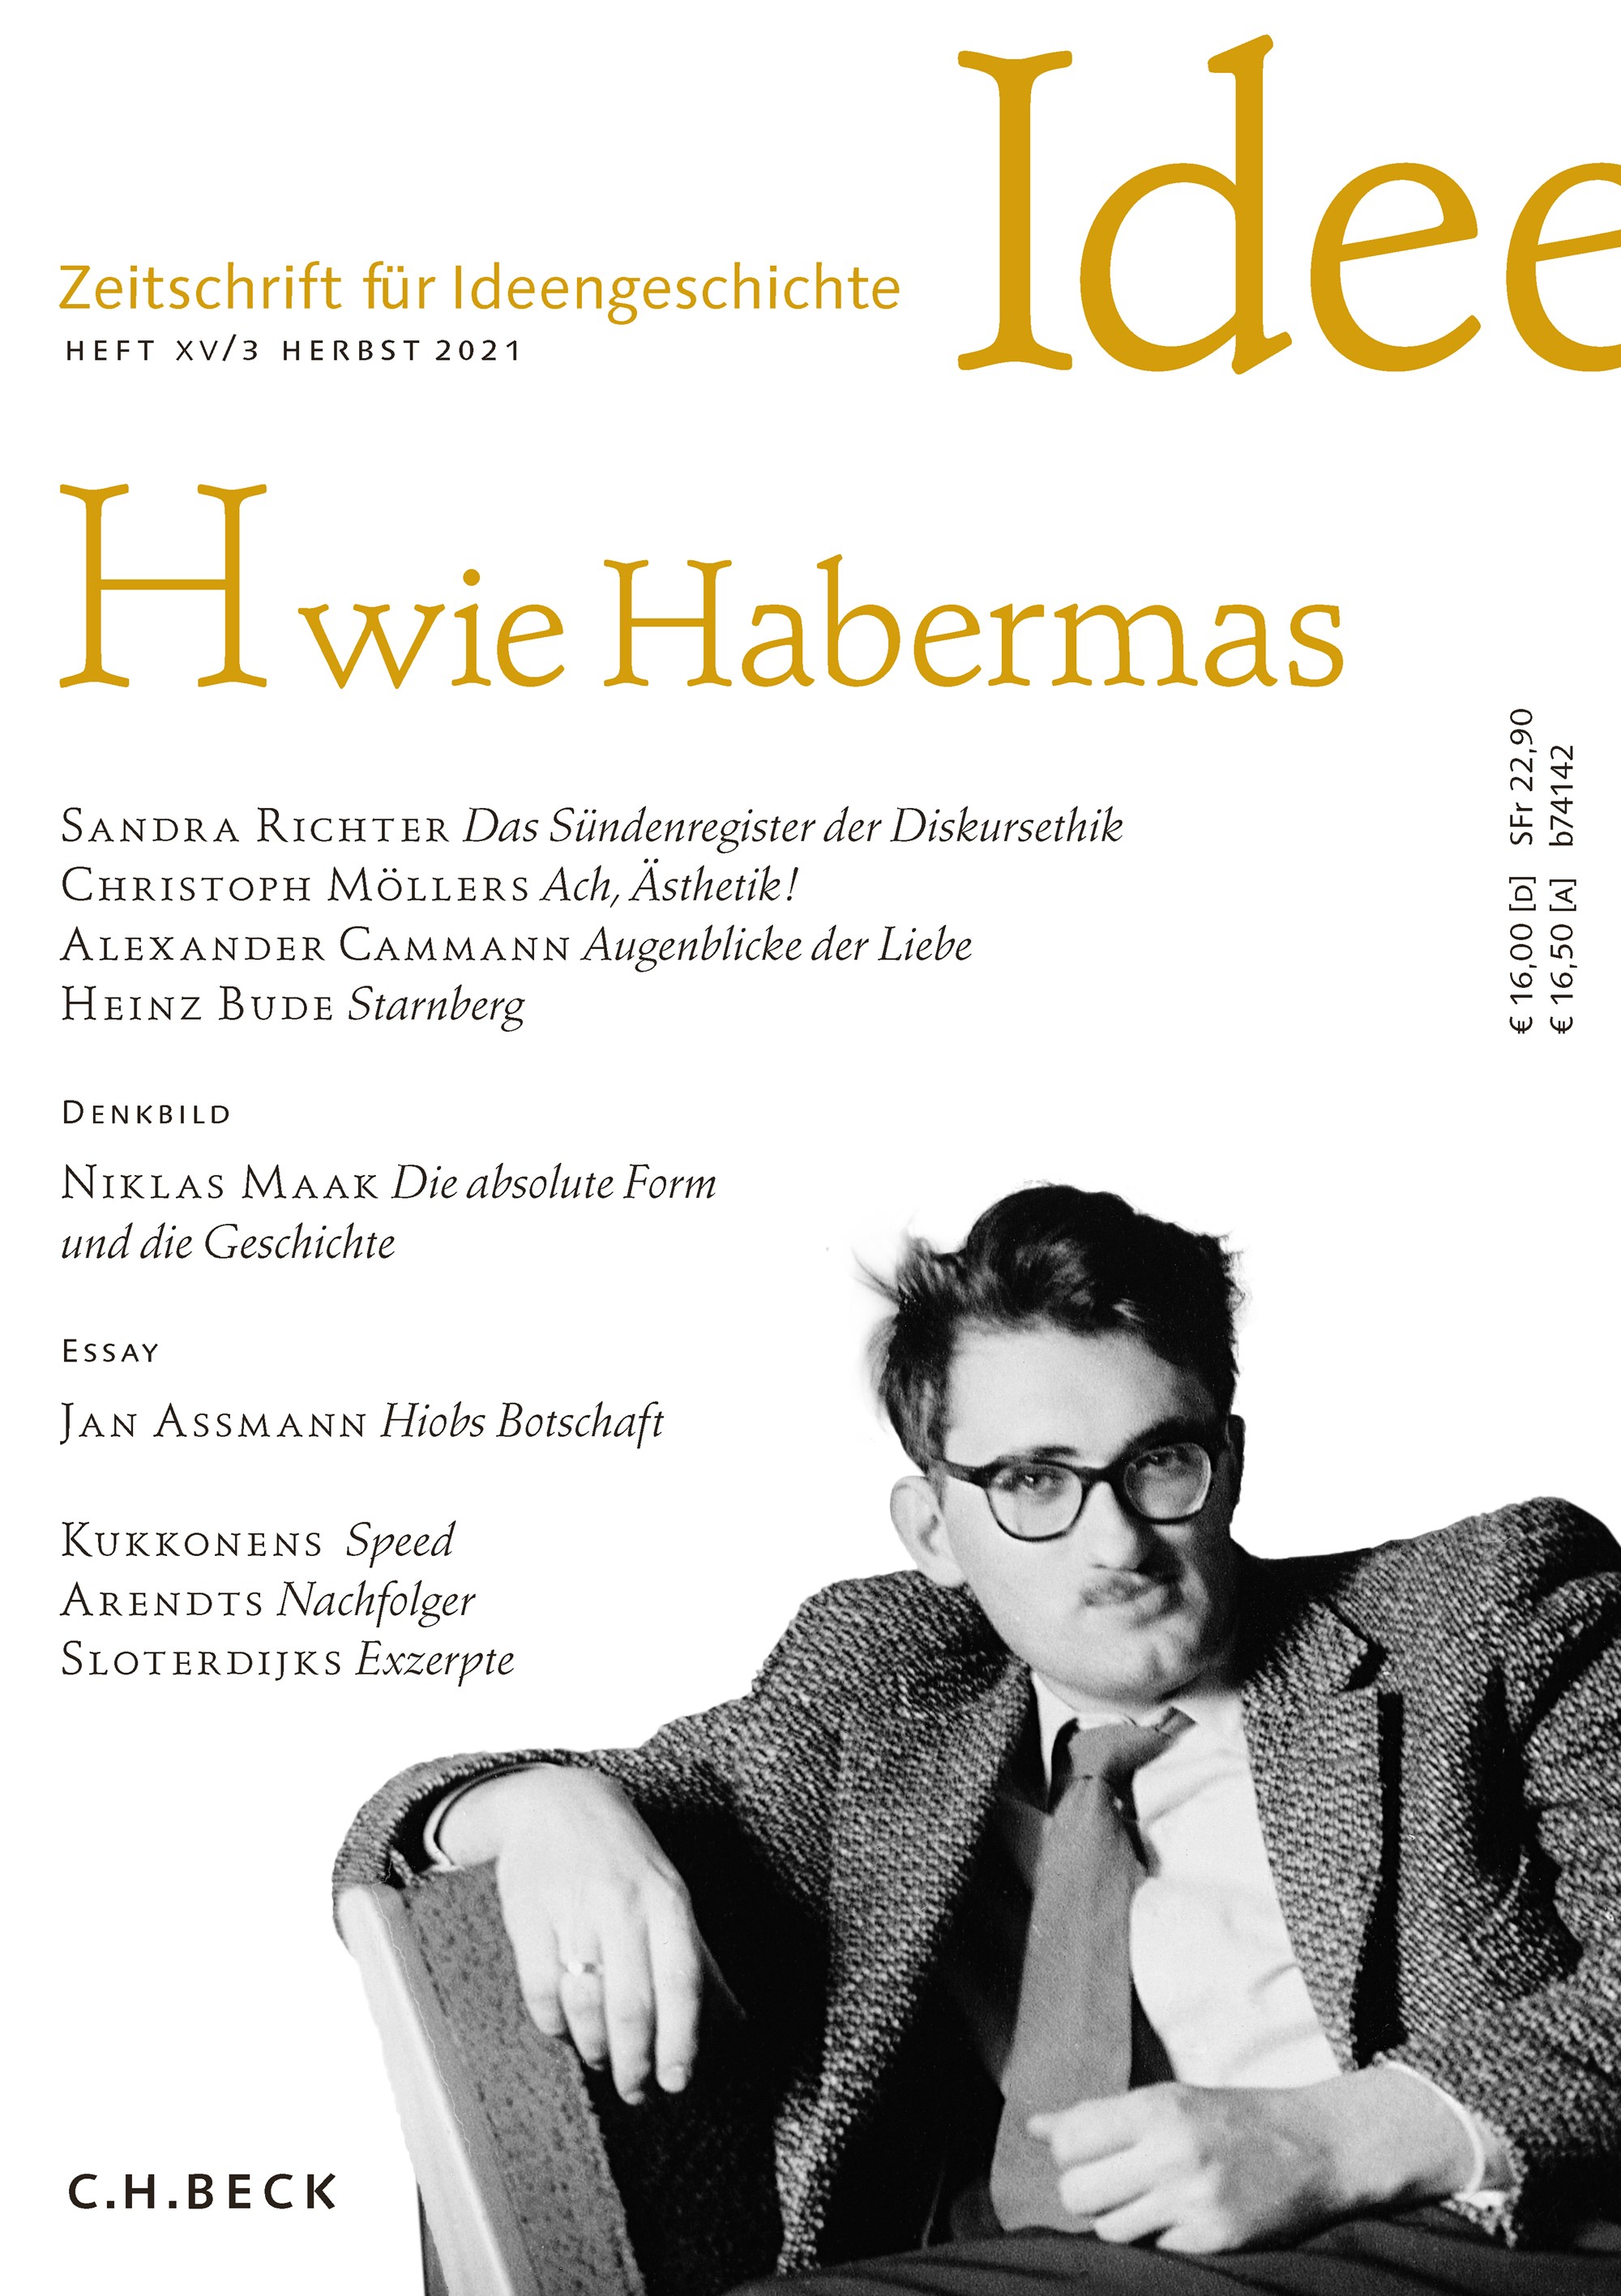 cover of Heft XV/3 Herbst 2021